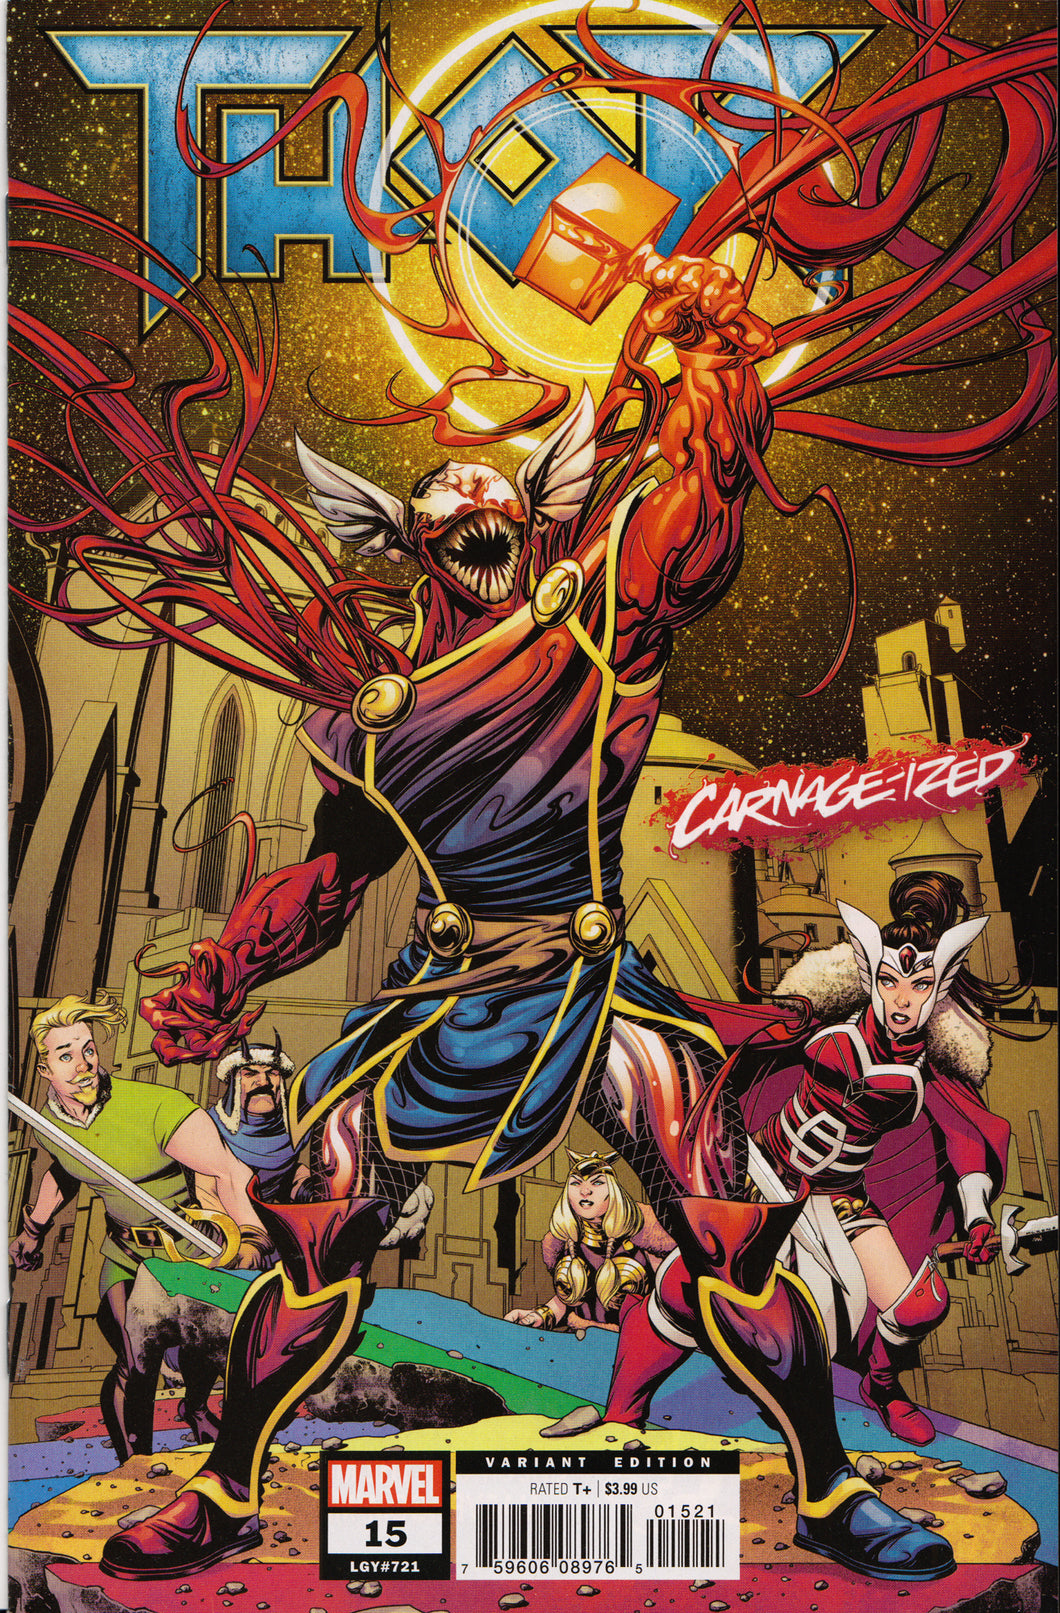 THOR #15 (CARNAGE-IZED VARIANT)(2019) COMIC BOOK ~ Marvel Comics